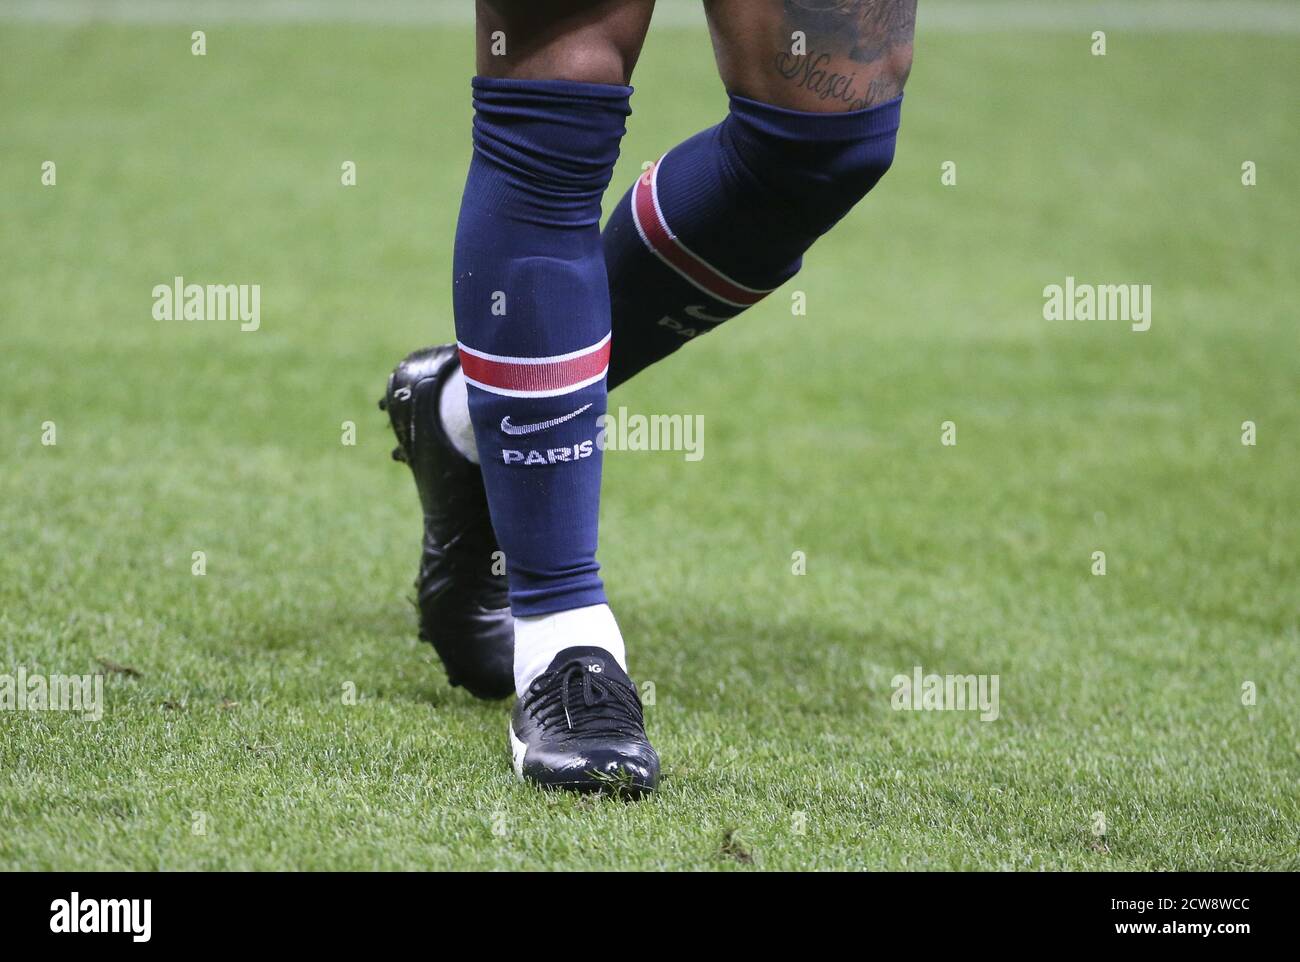 Neymar Jr di PSG indossa le sue nuove scarpe Puma durante Il campionato francese Ligue 1 partita di calcio tra Stade de Reims e Paris Saint-Germain su se Foto Stock